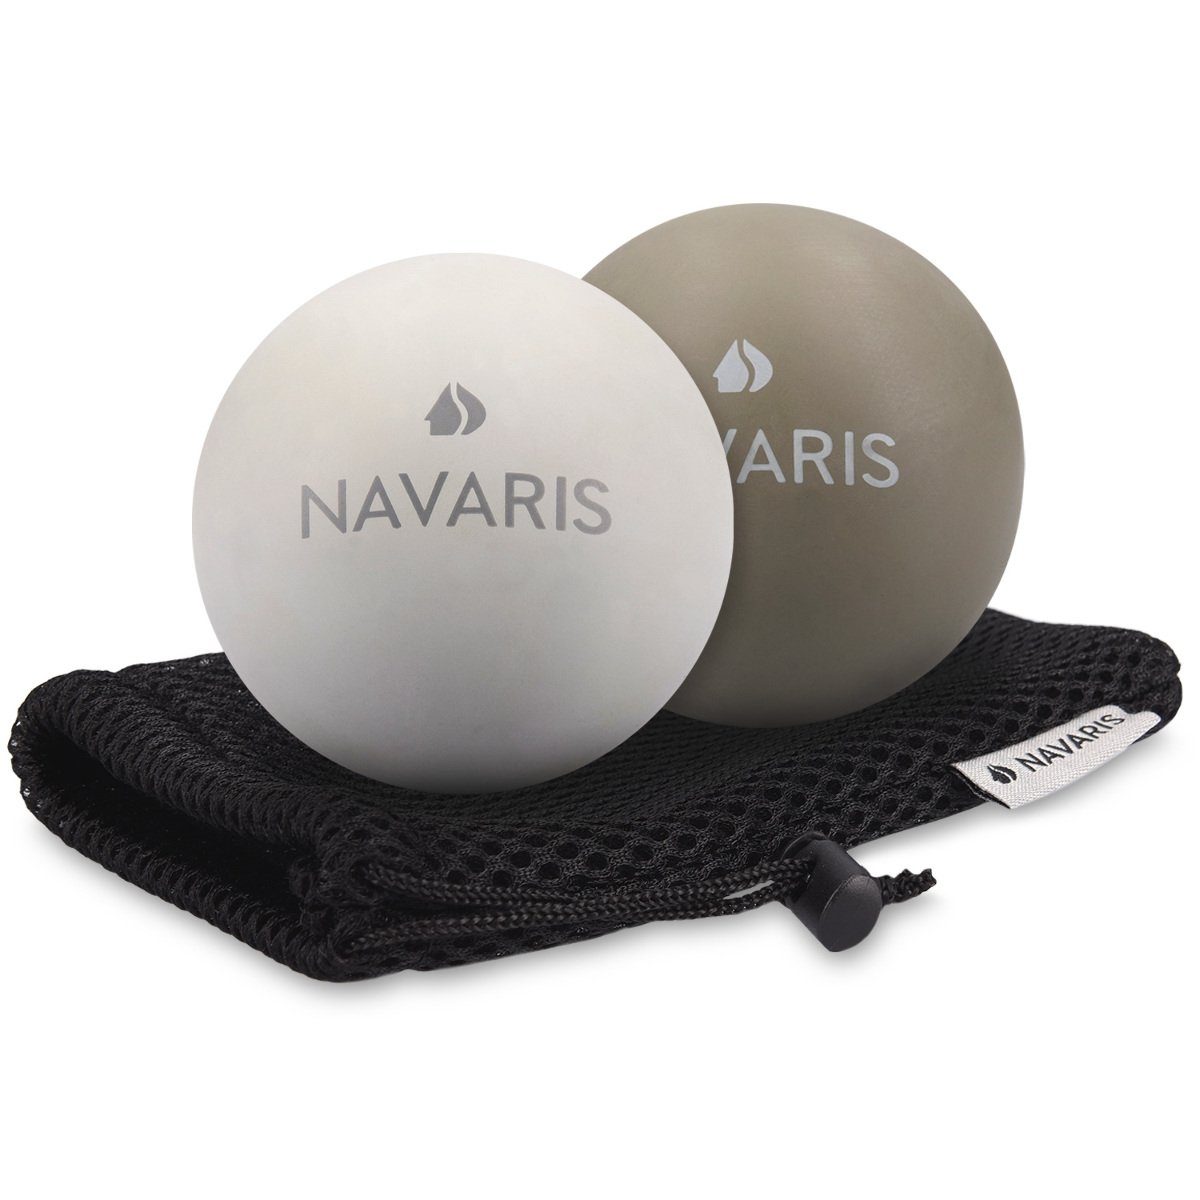 Selbstmassage - Faszien - Massageball Massage Triggerpunkte Stoffball Set Navaris - 2er